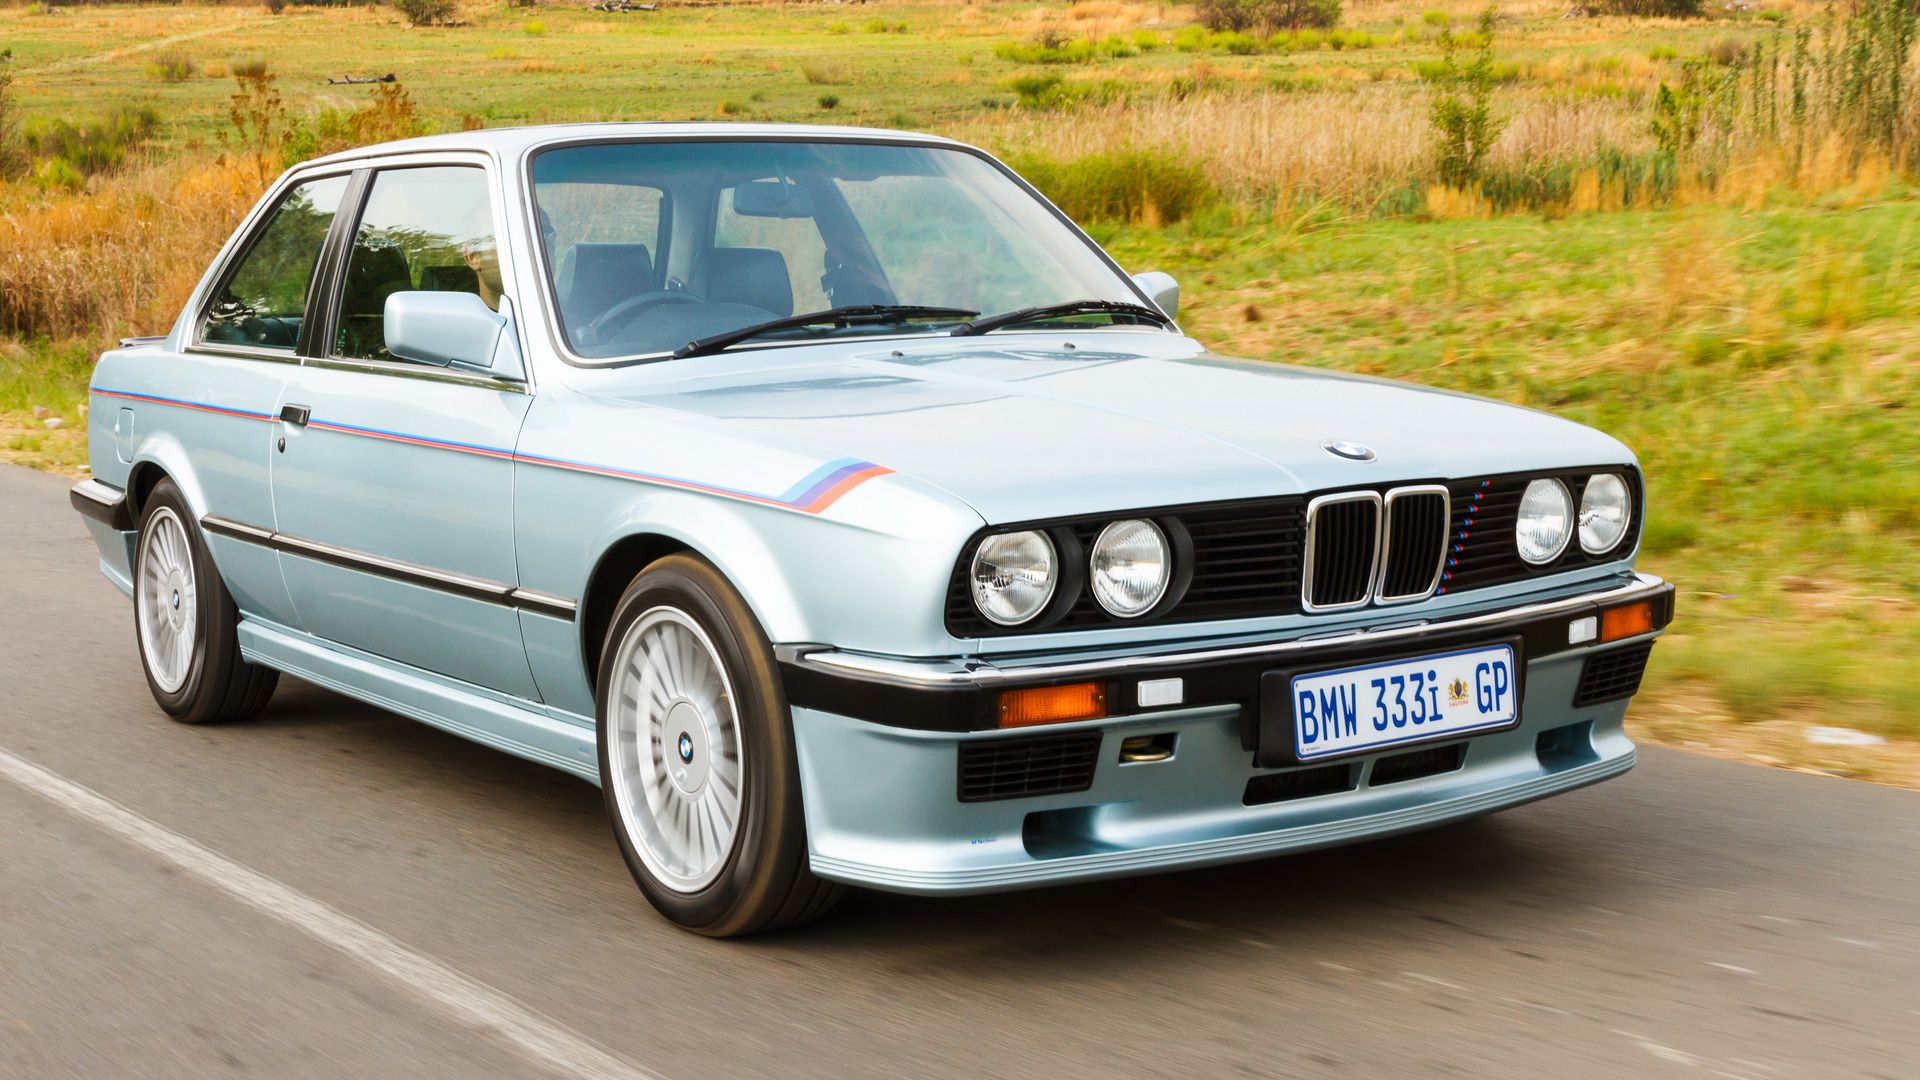 BMW E30 333i Driving